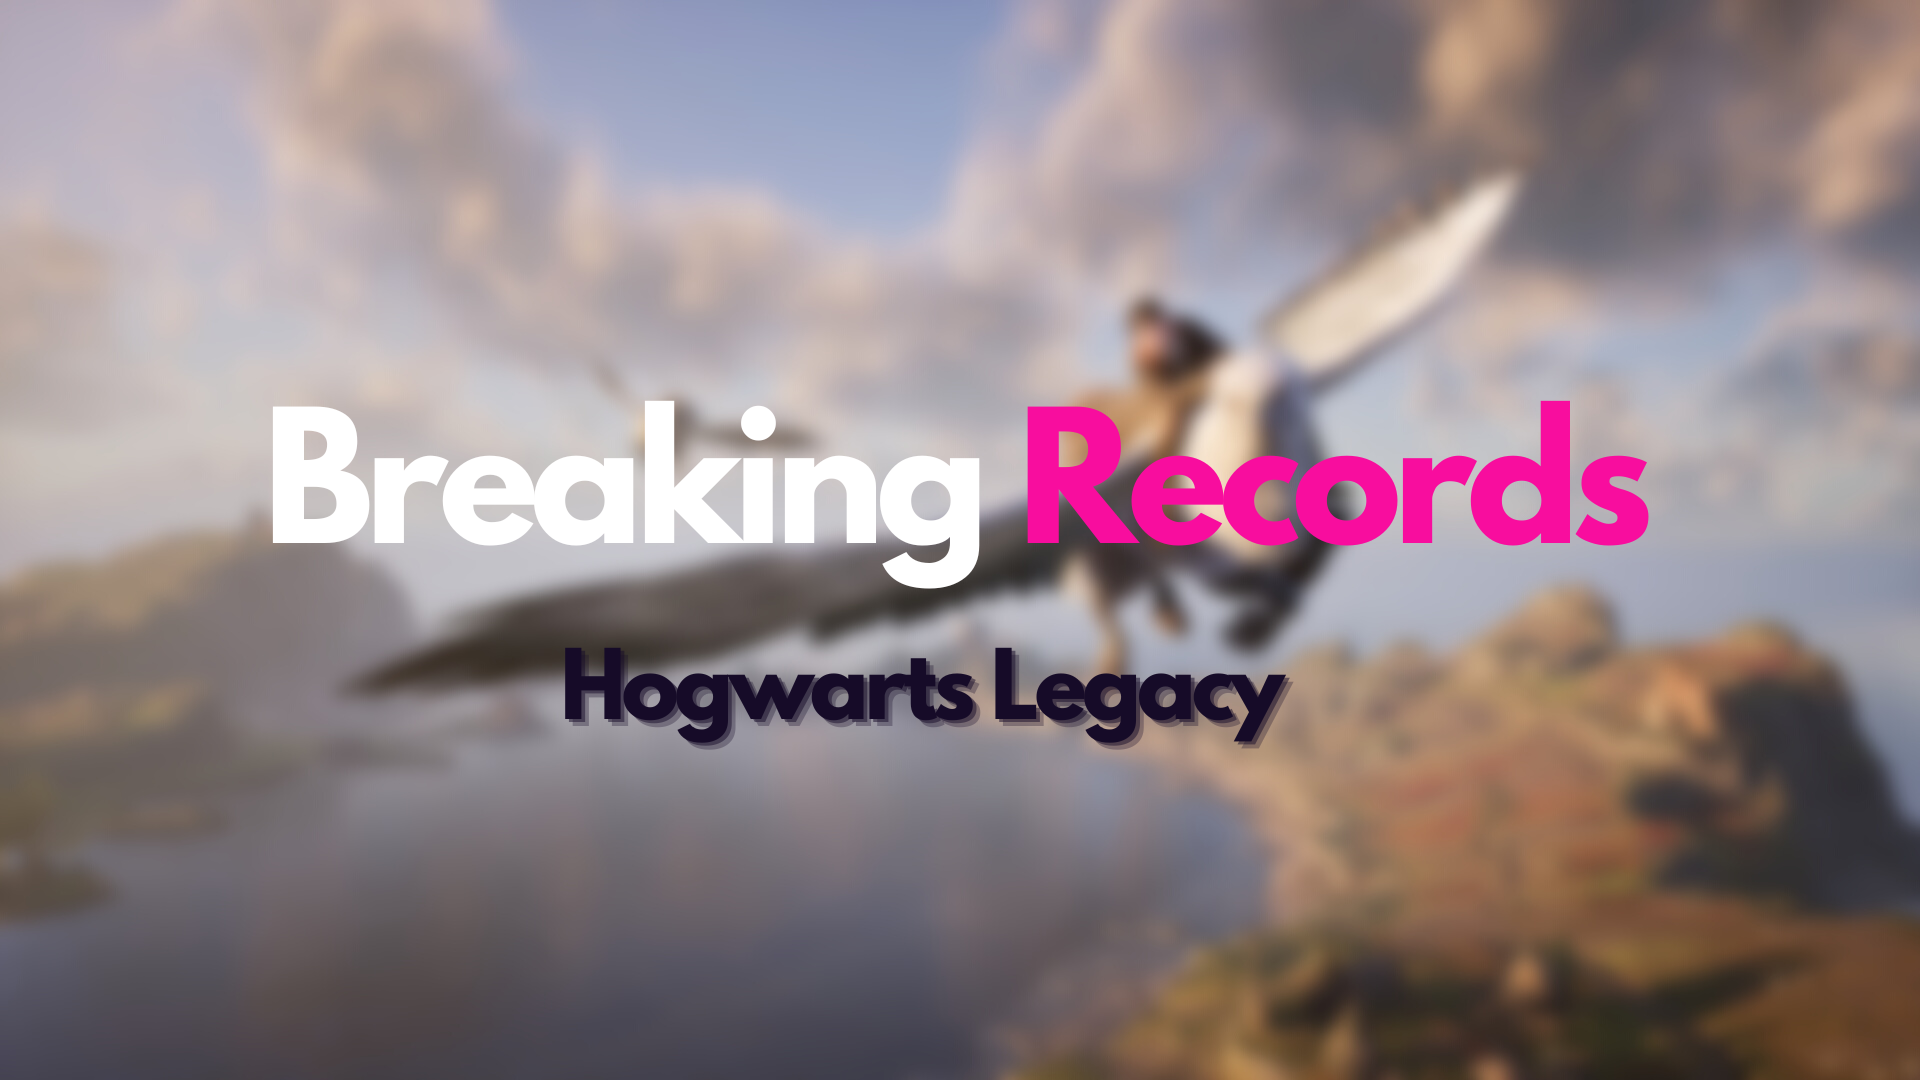 Hogwarts Legacy Sales: $850 Million, 12 Million Units in First 2 Weeks